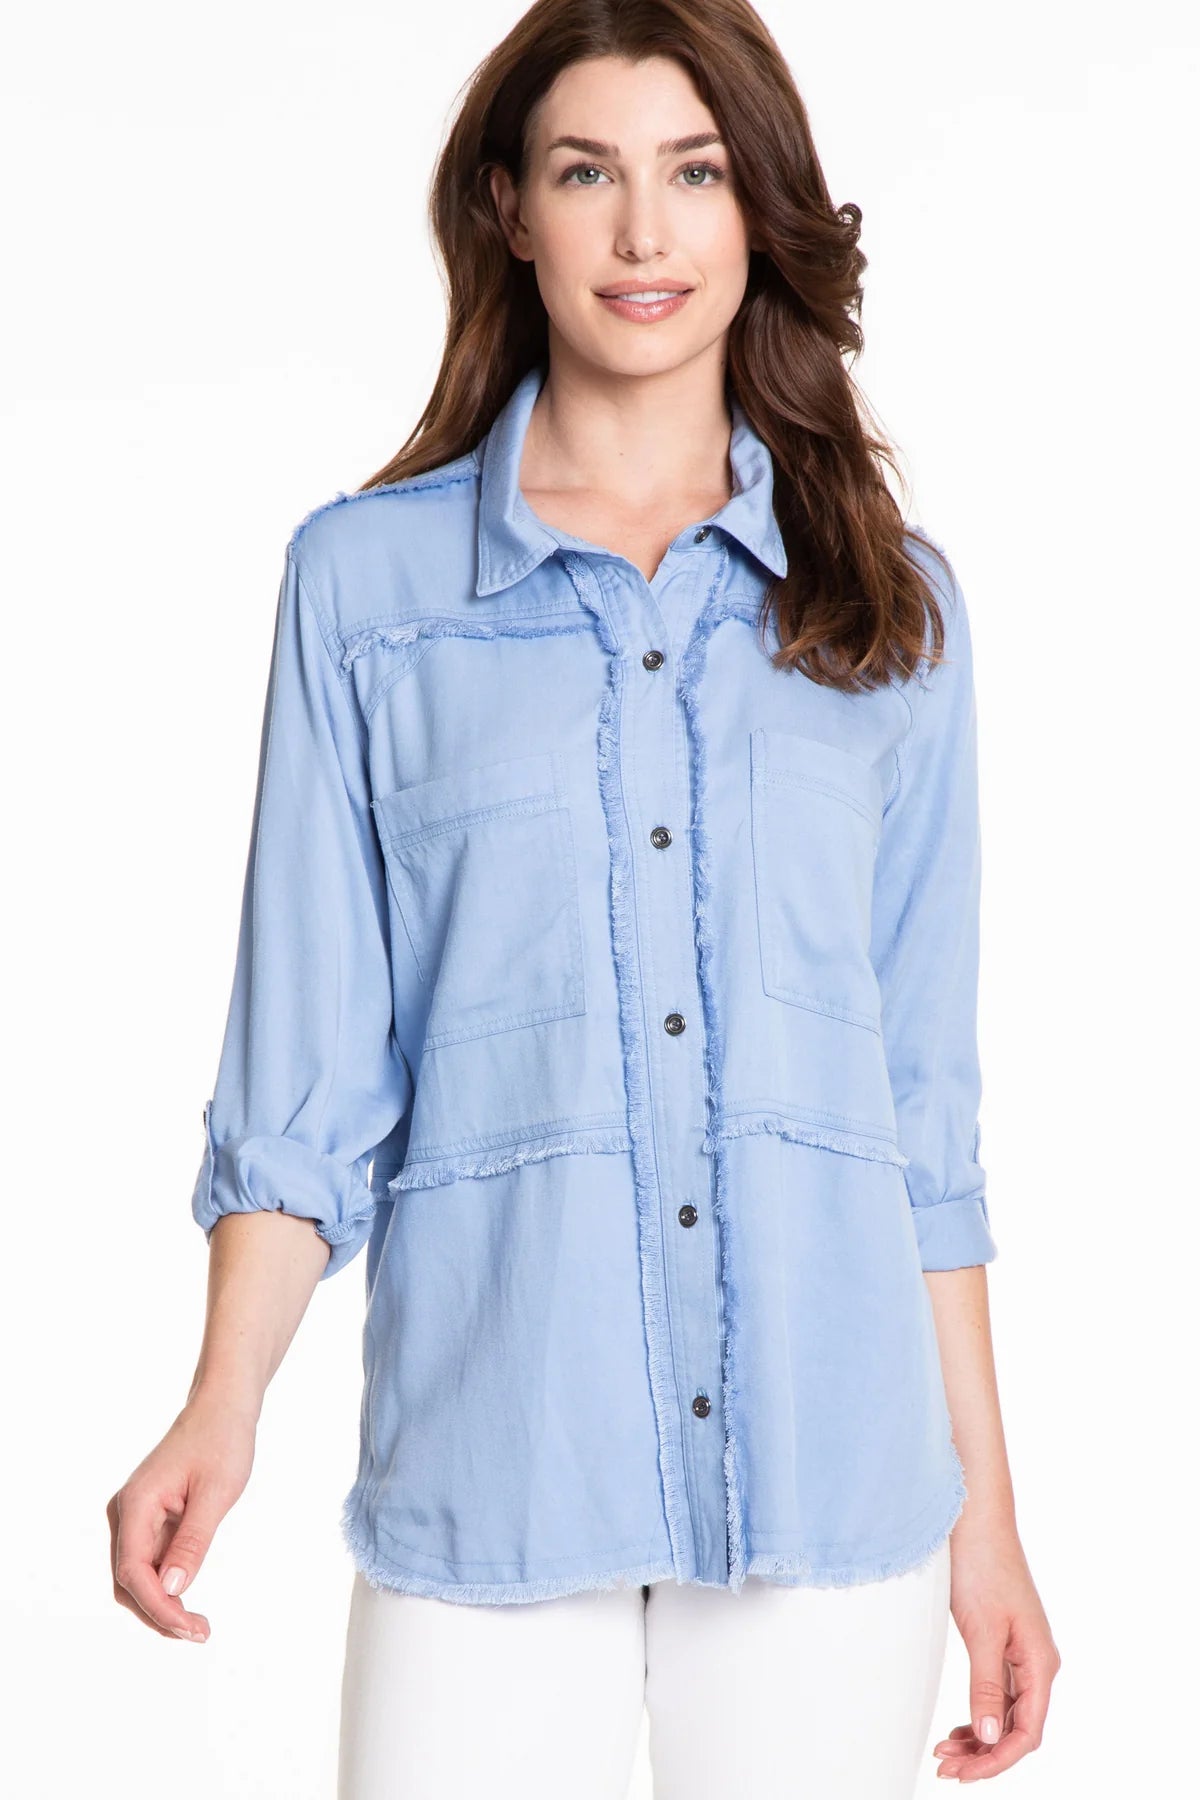 Fringed Button Down Shirt - Medium Blue